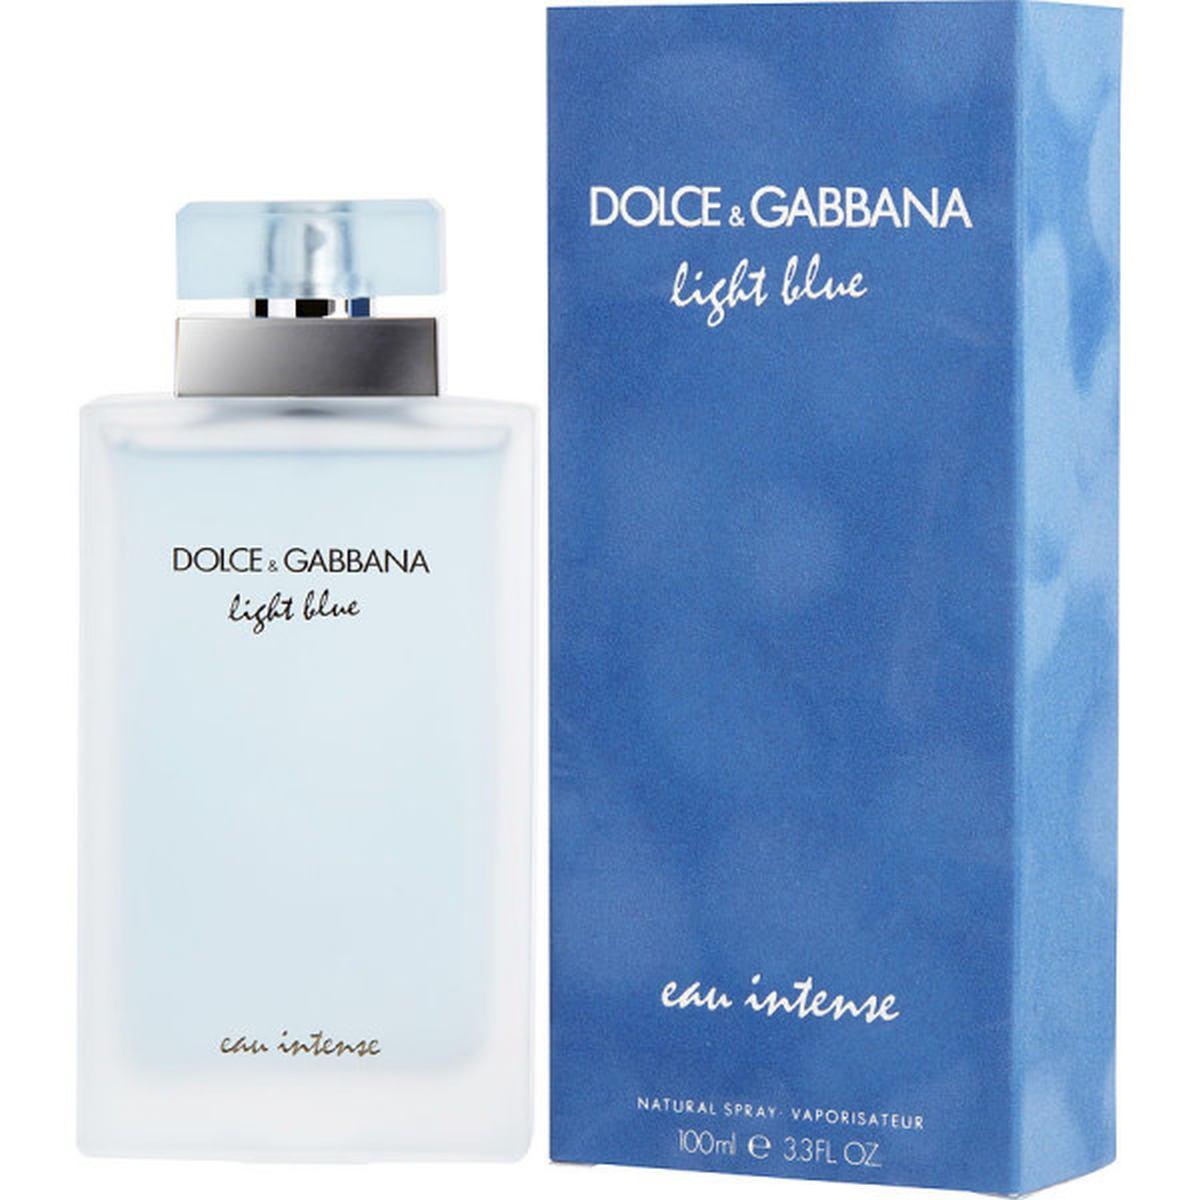 Perfume The Only One para Mujer de Dolce & Gabbana– Arome México